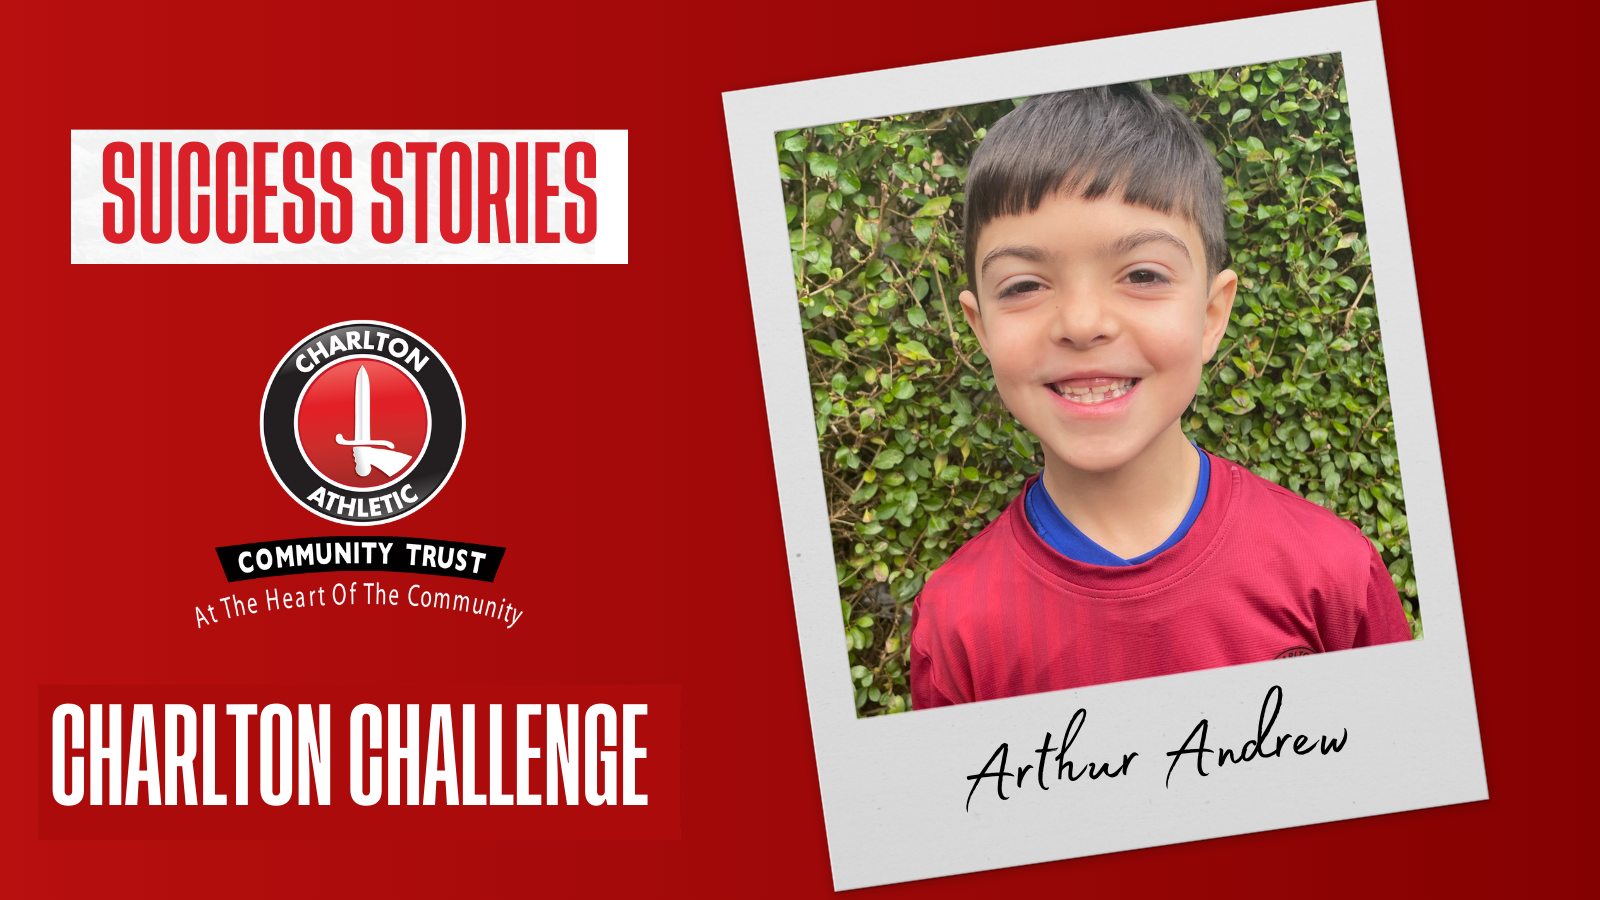 Arthur Andrew - Charlton Challenge